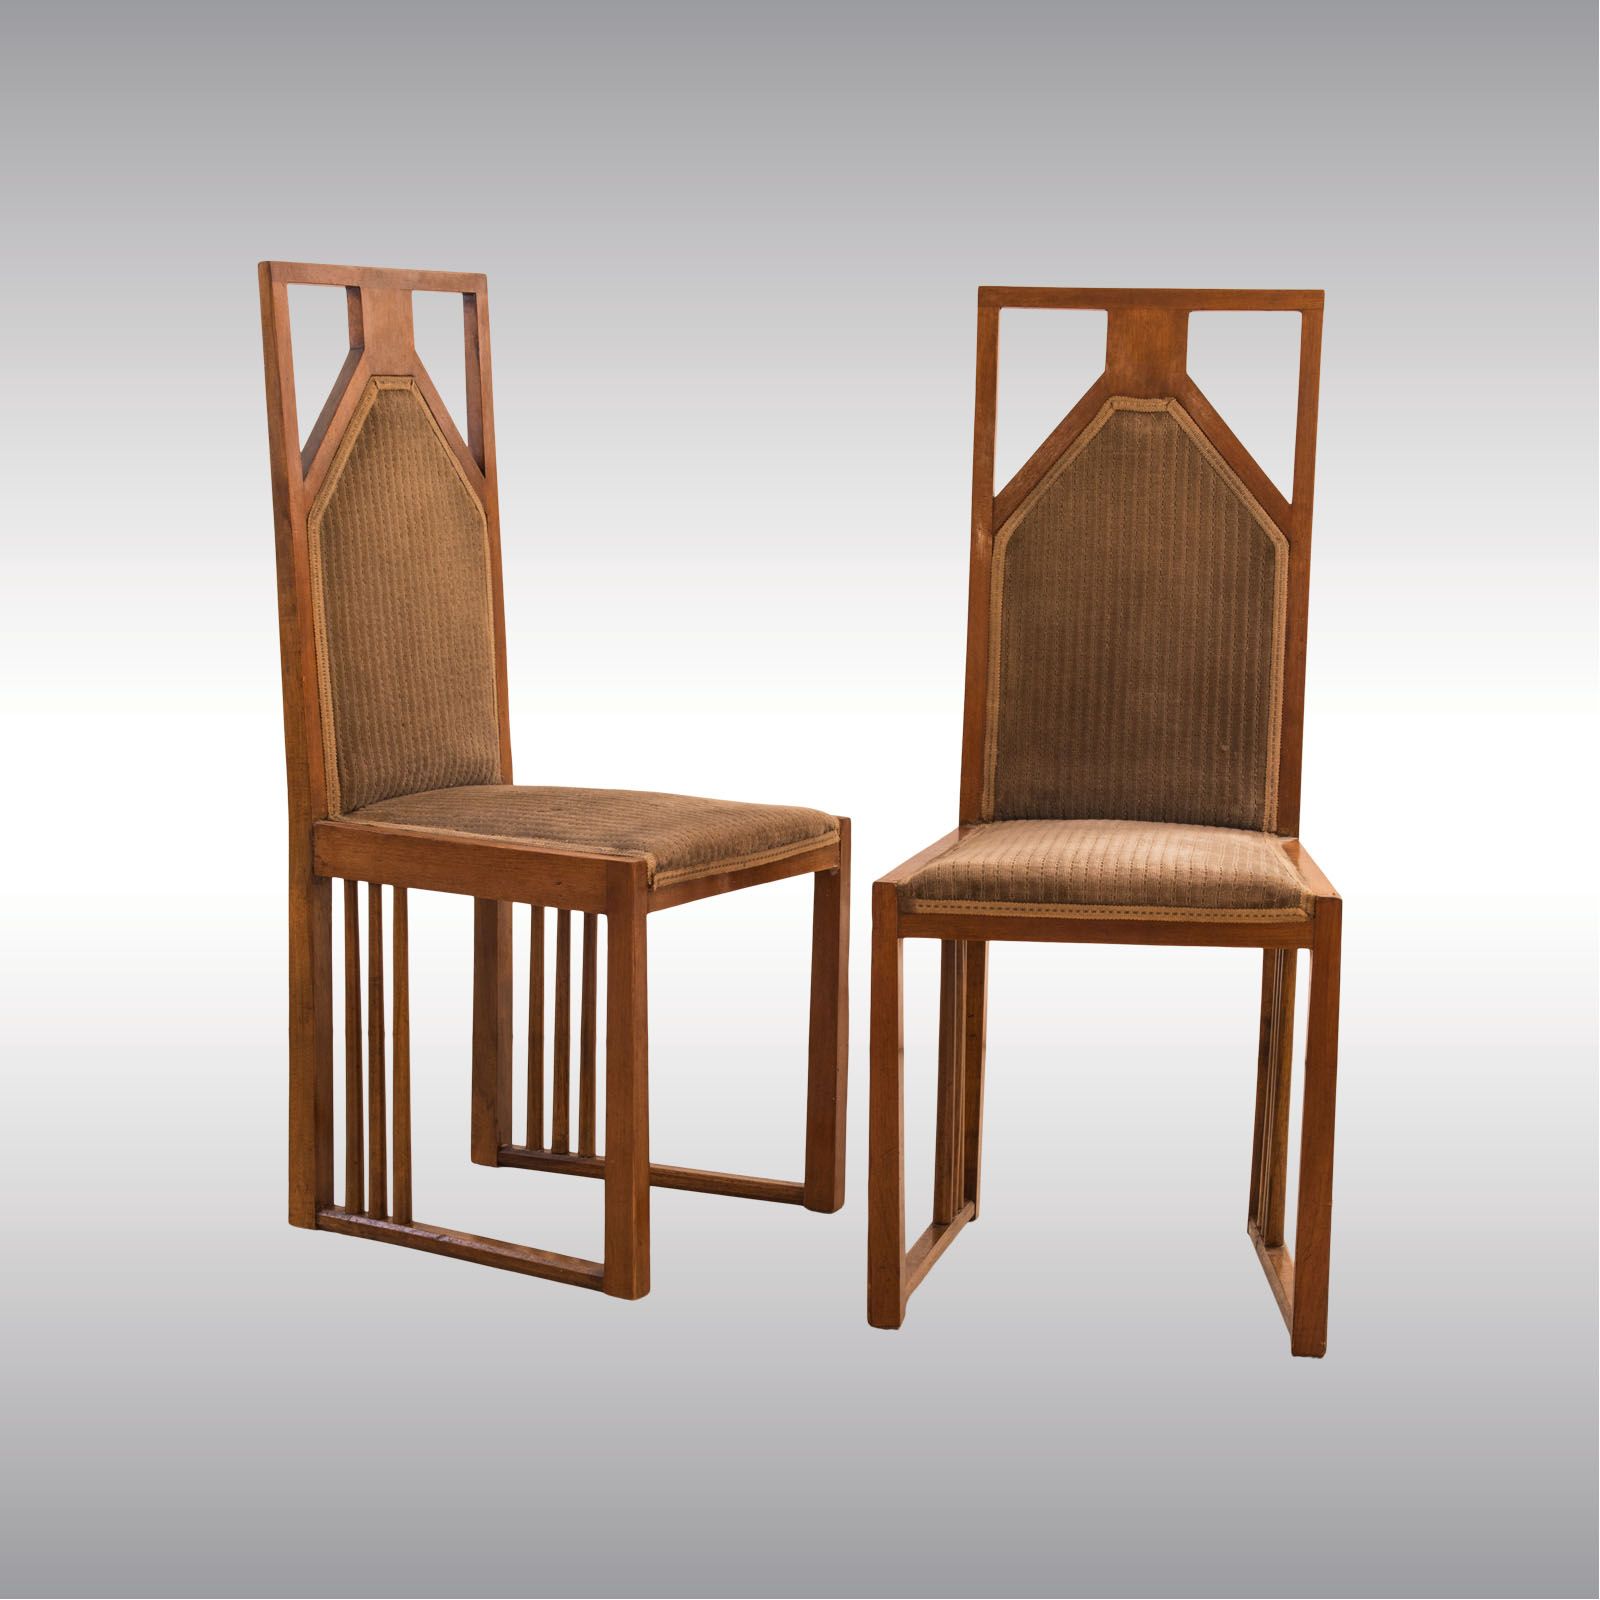 WOKA LAMPS VIENNA - OrderNr.: 80008|Pair of extraordinary chairs 1905-10 - Design: Josef Hoffmann attr.